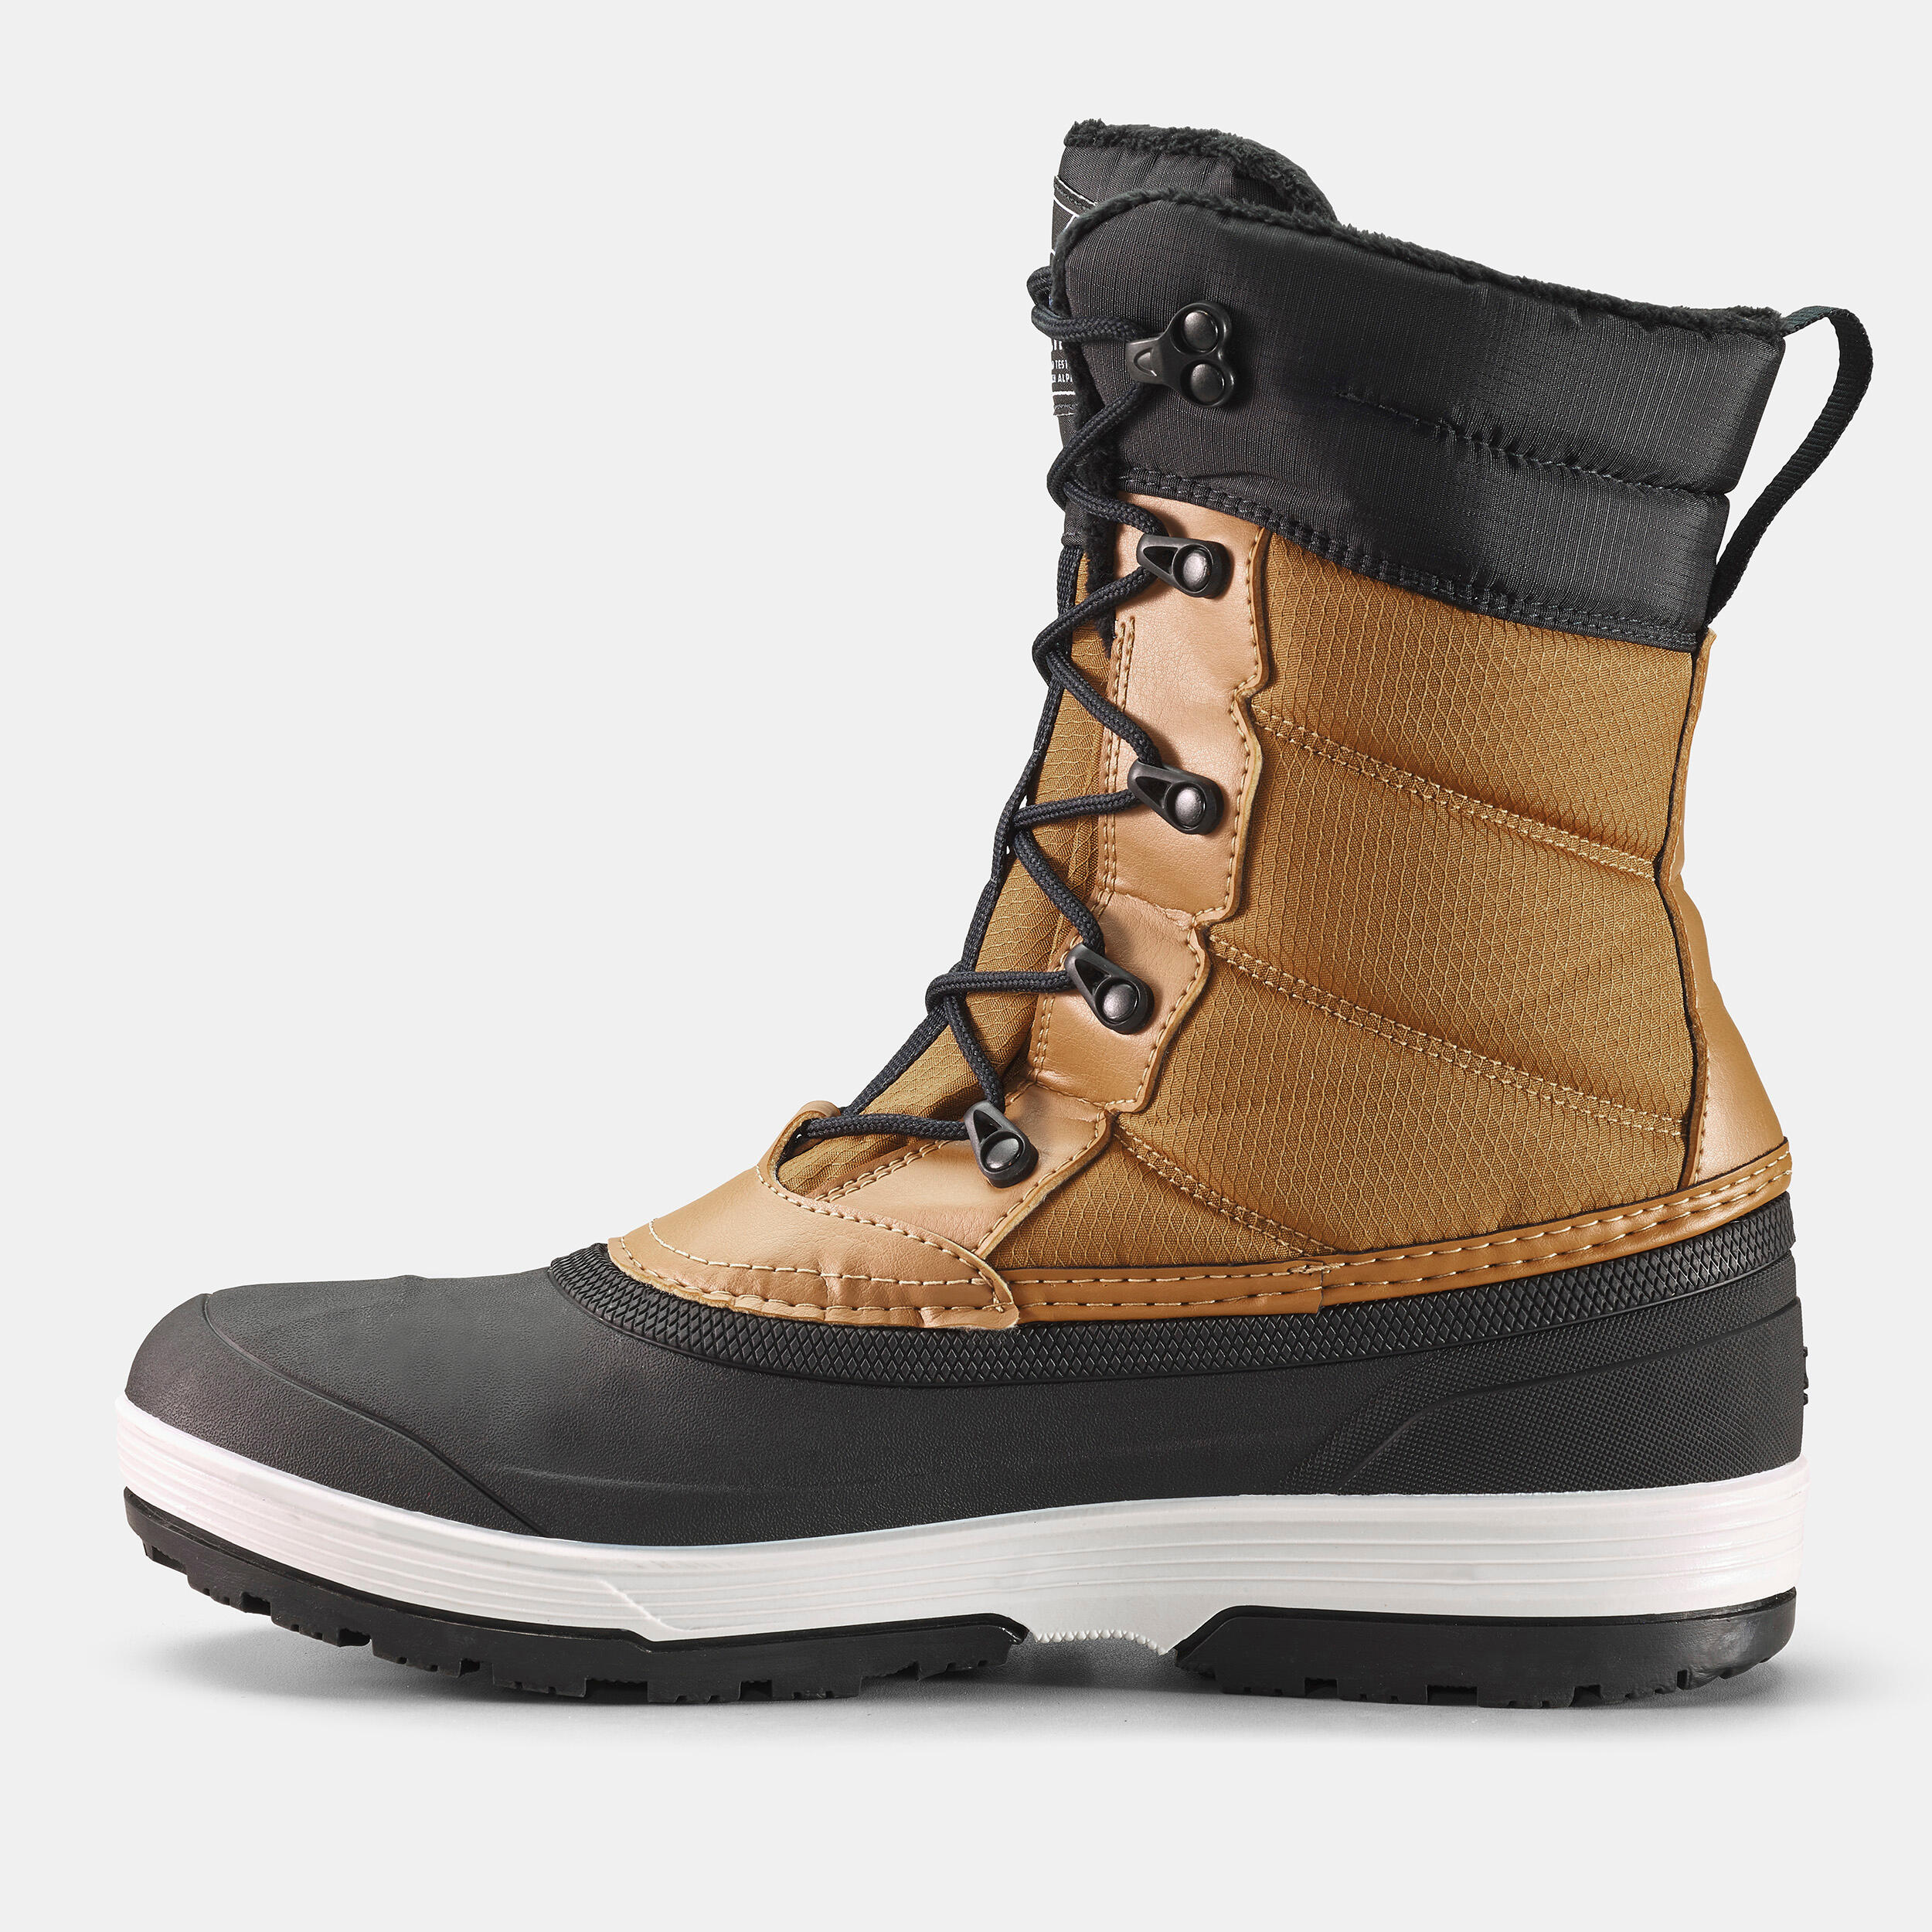 Men’s Warm Waterproof Snow Hiking Boots  - SH500 X- WARM - Lace 5/9